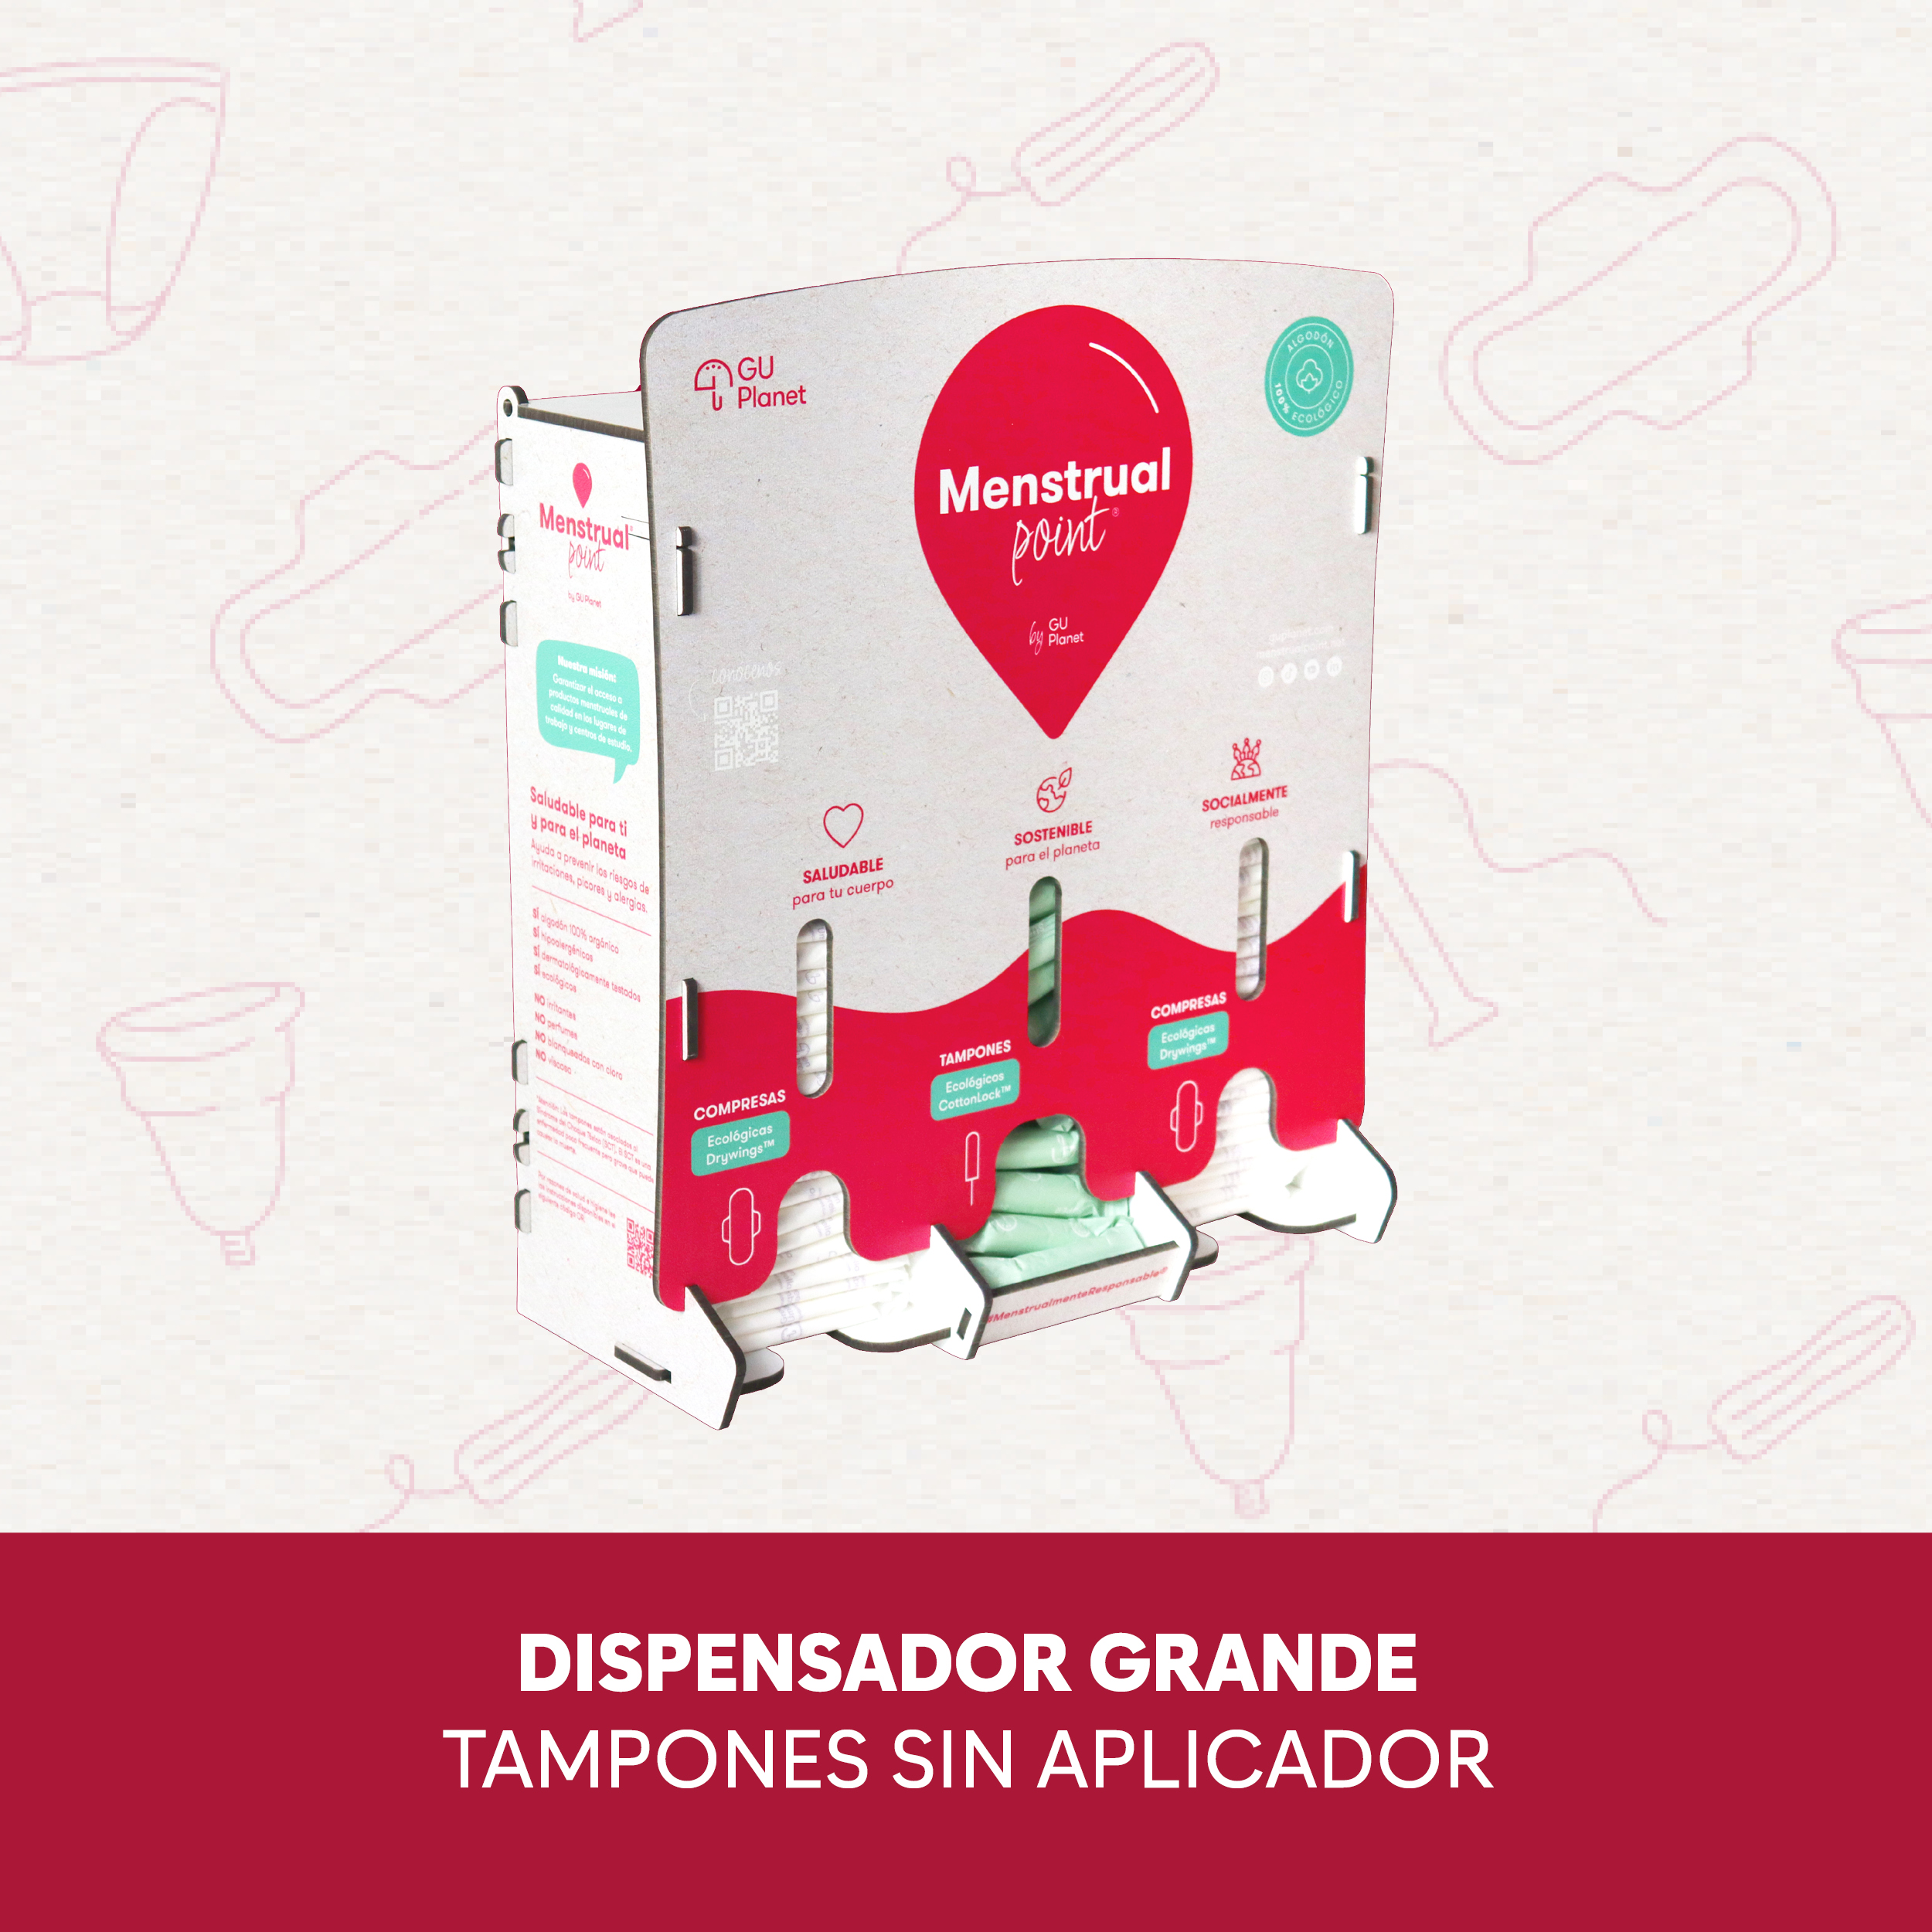 papelmatic-higiene-profesional-guia-para-comprar-productos-higiene-menstrual-point-dispensador-grande-tampones-sin-aplicador